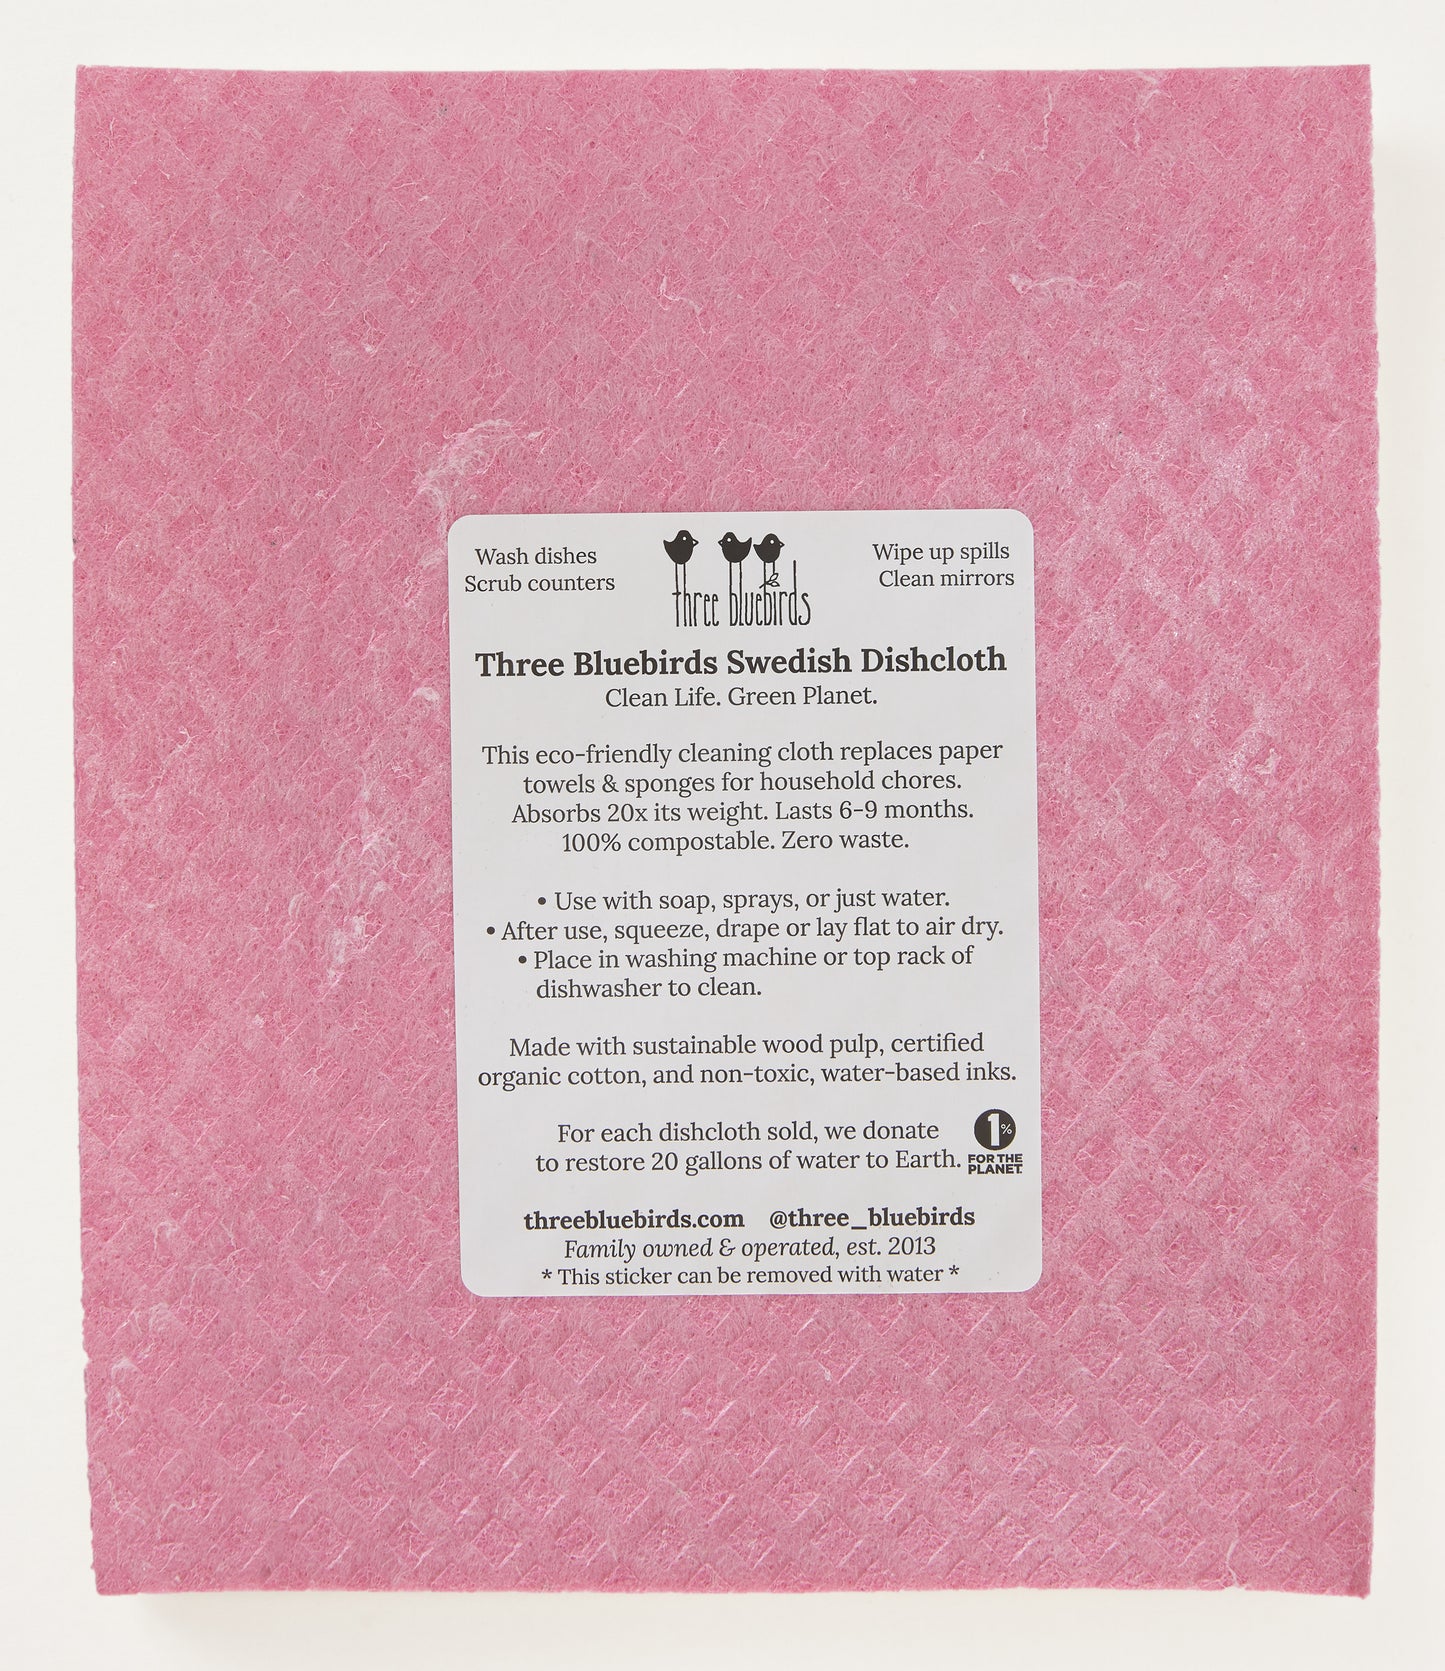 Reusable Swedish Dishcloths - 45 Styles, Bow Wow on Pink